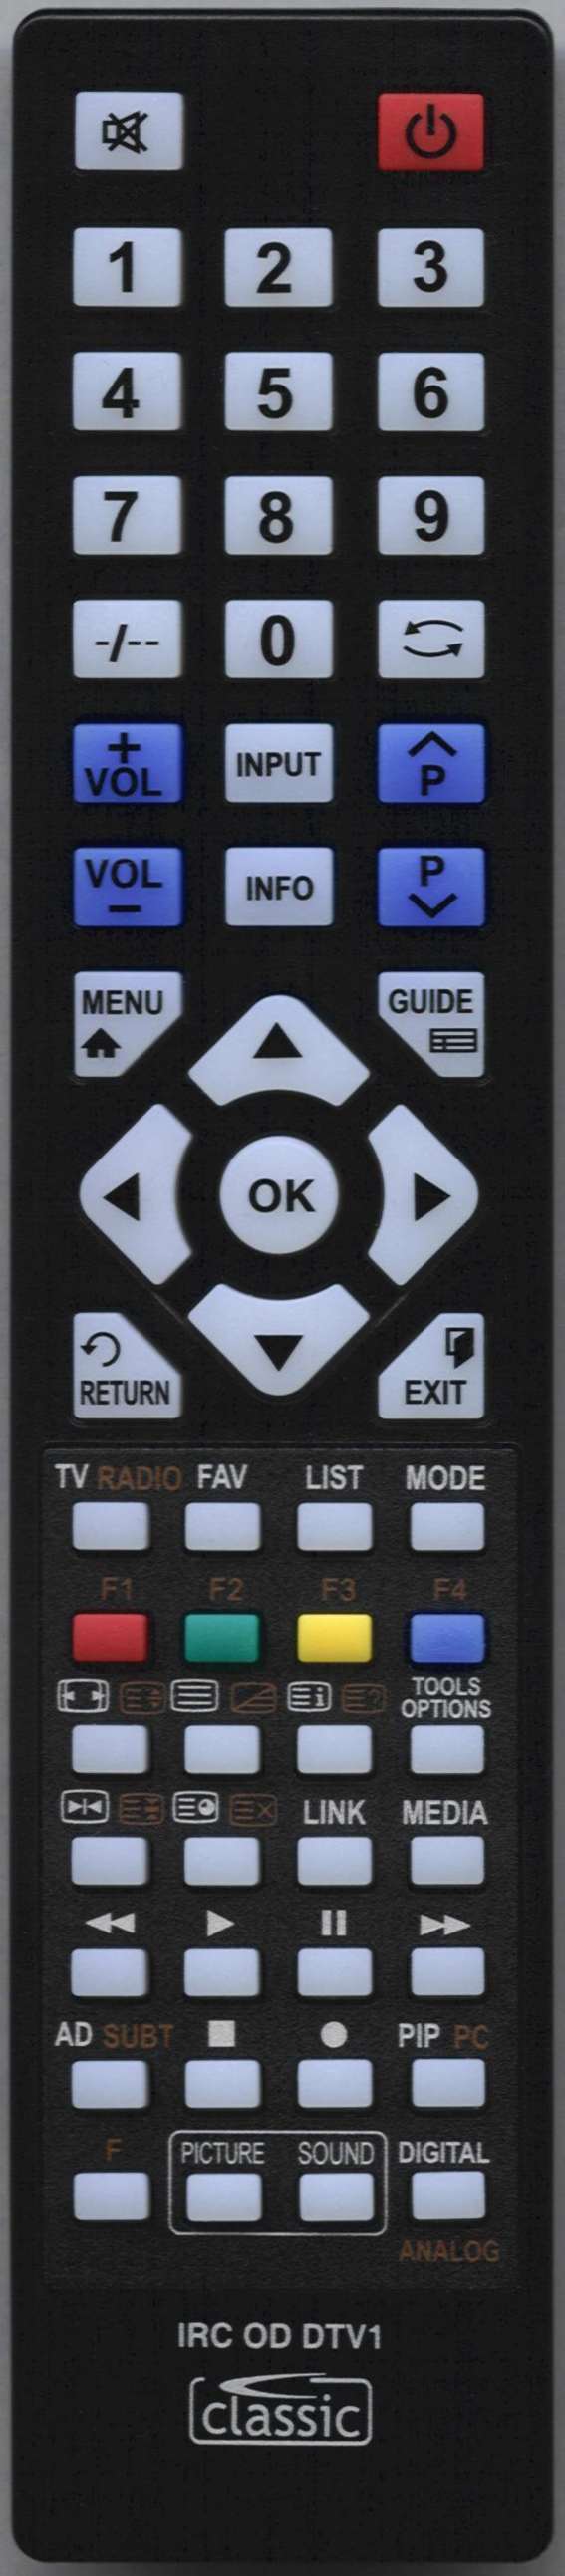 DIGITREX CFD2271 Remote Control